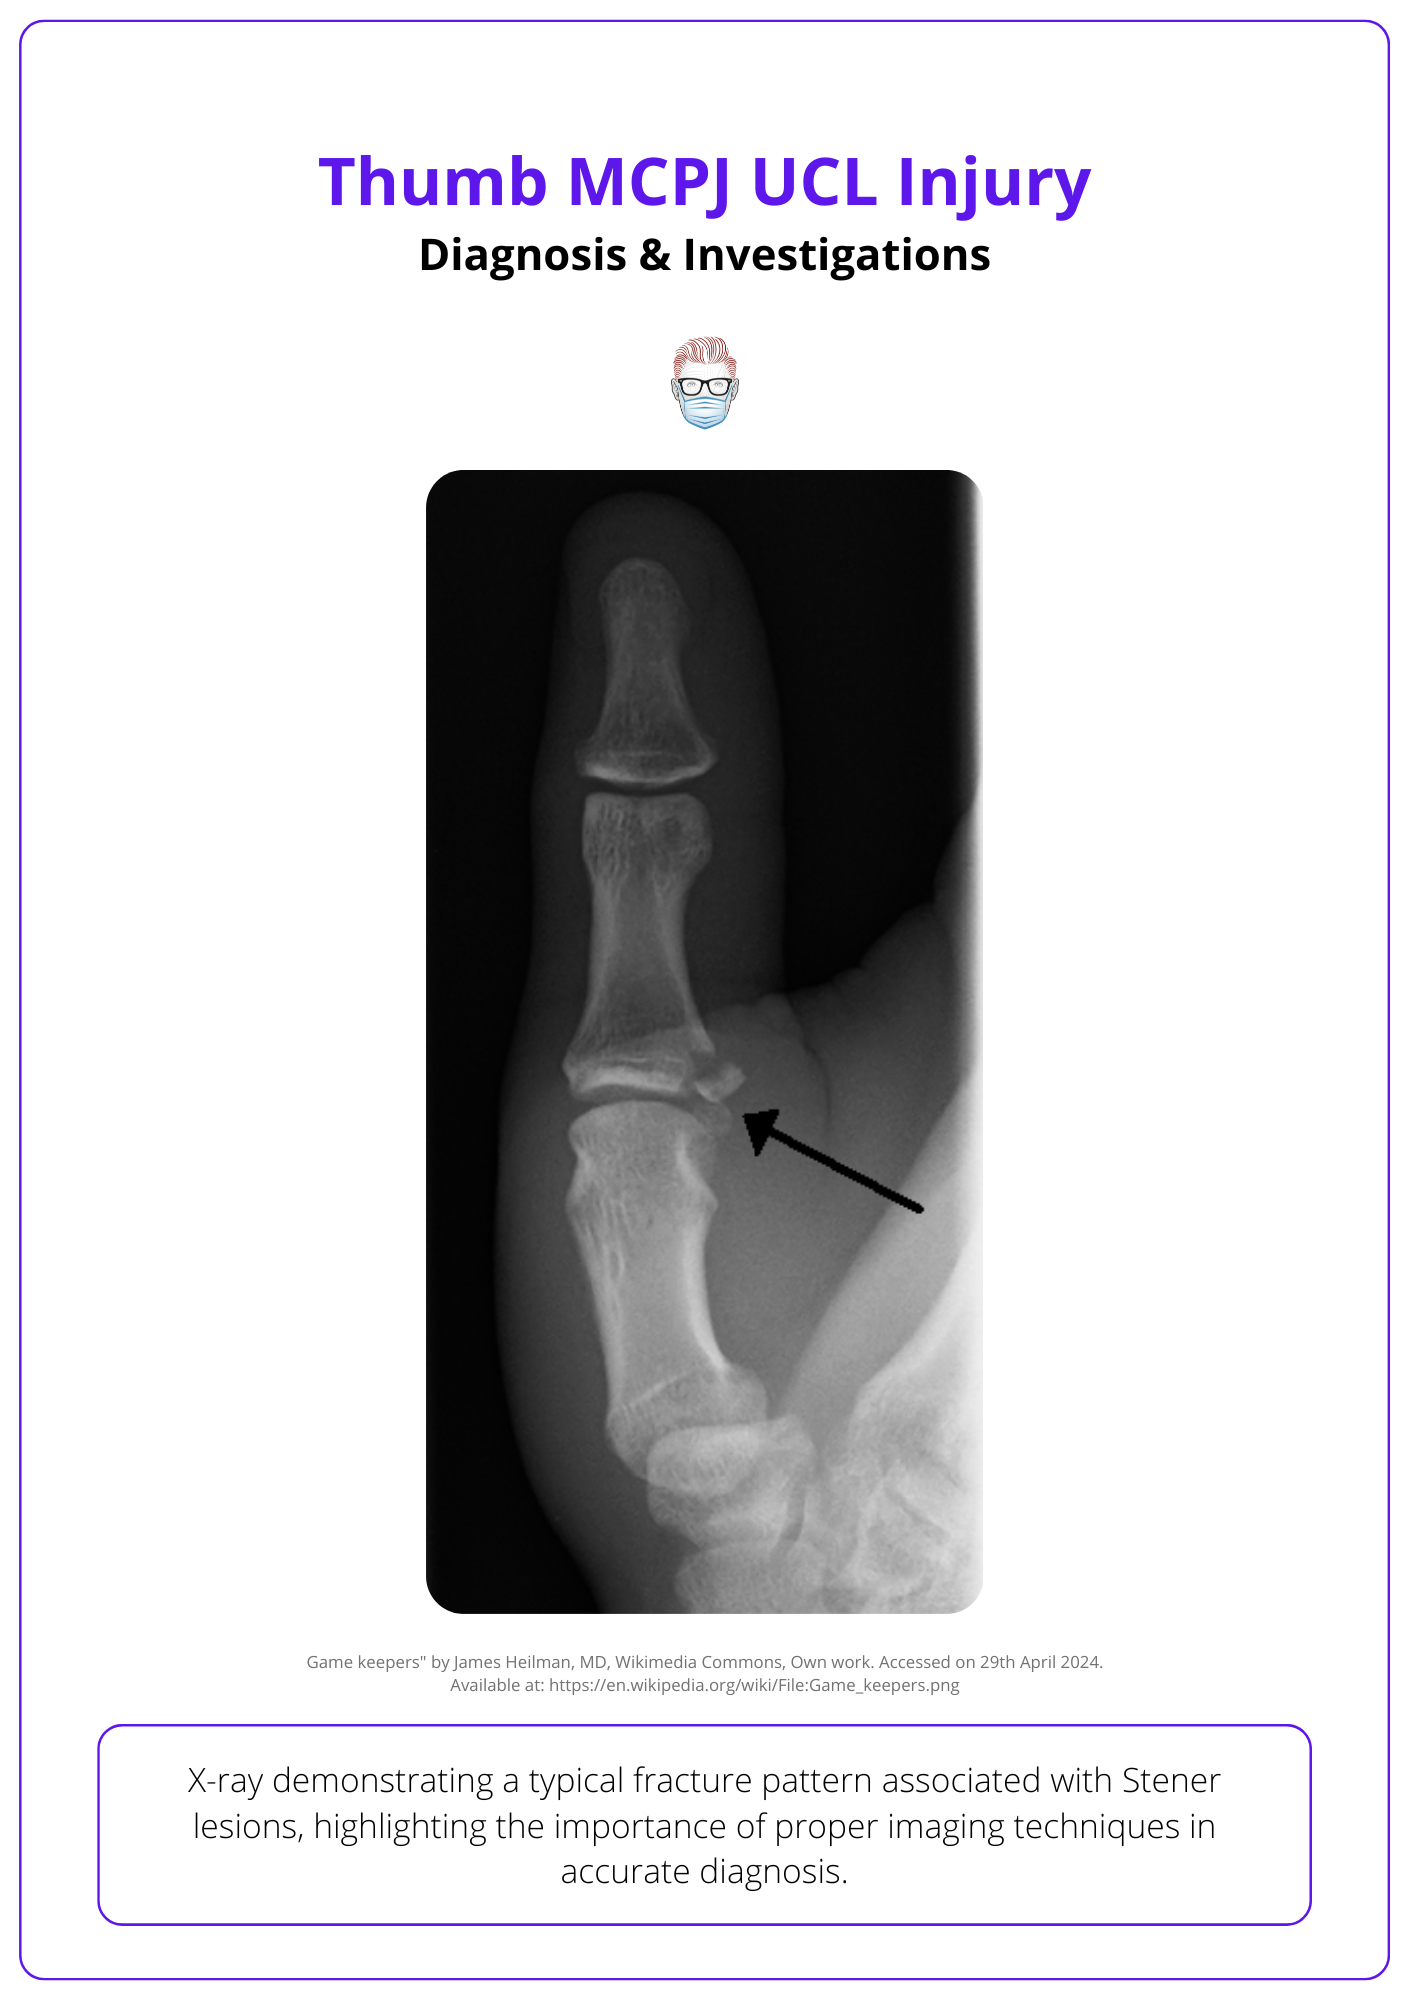 X-ray ulnar collateral avulsion fragment, Thumb MCPJ UCL Injury